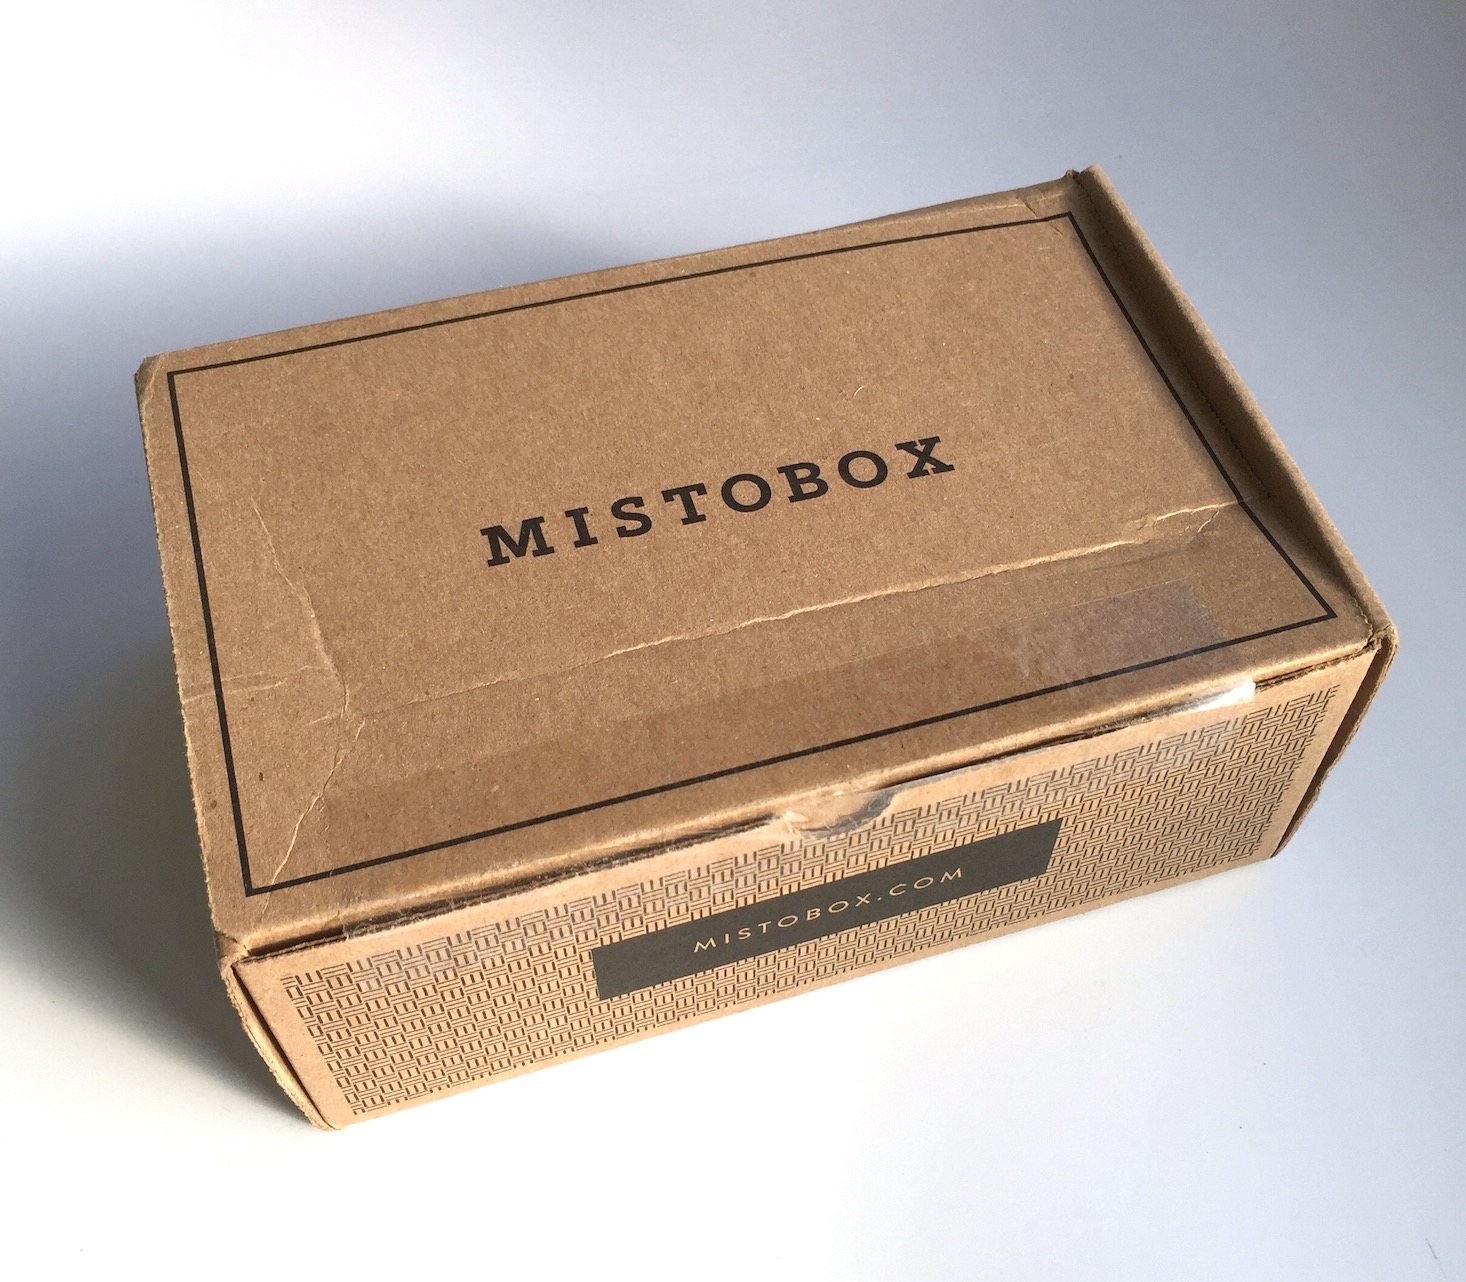 MistoBox Coffee Subscription Box Review – November 2016